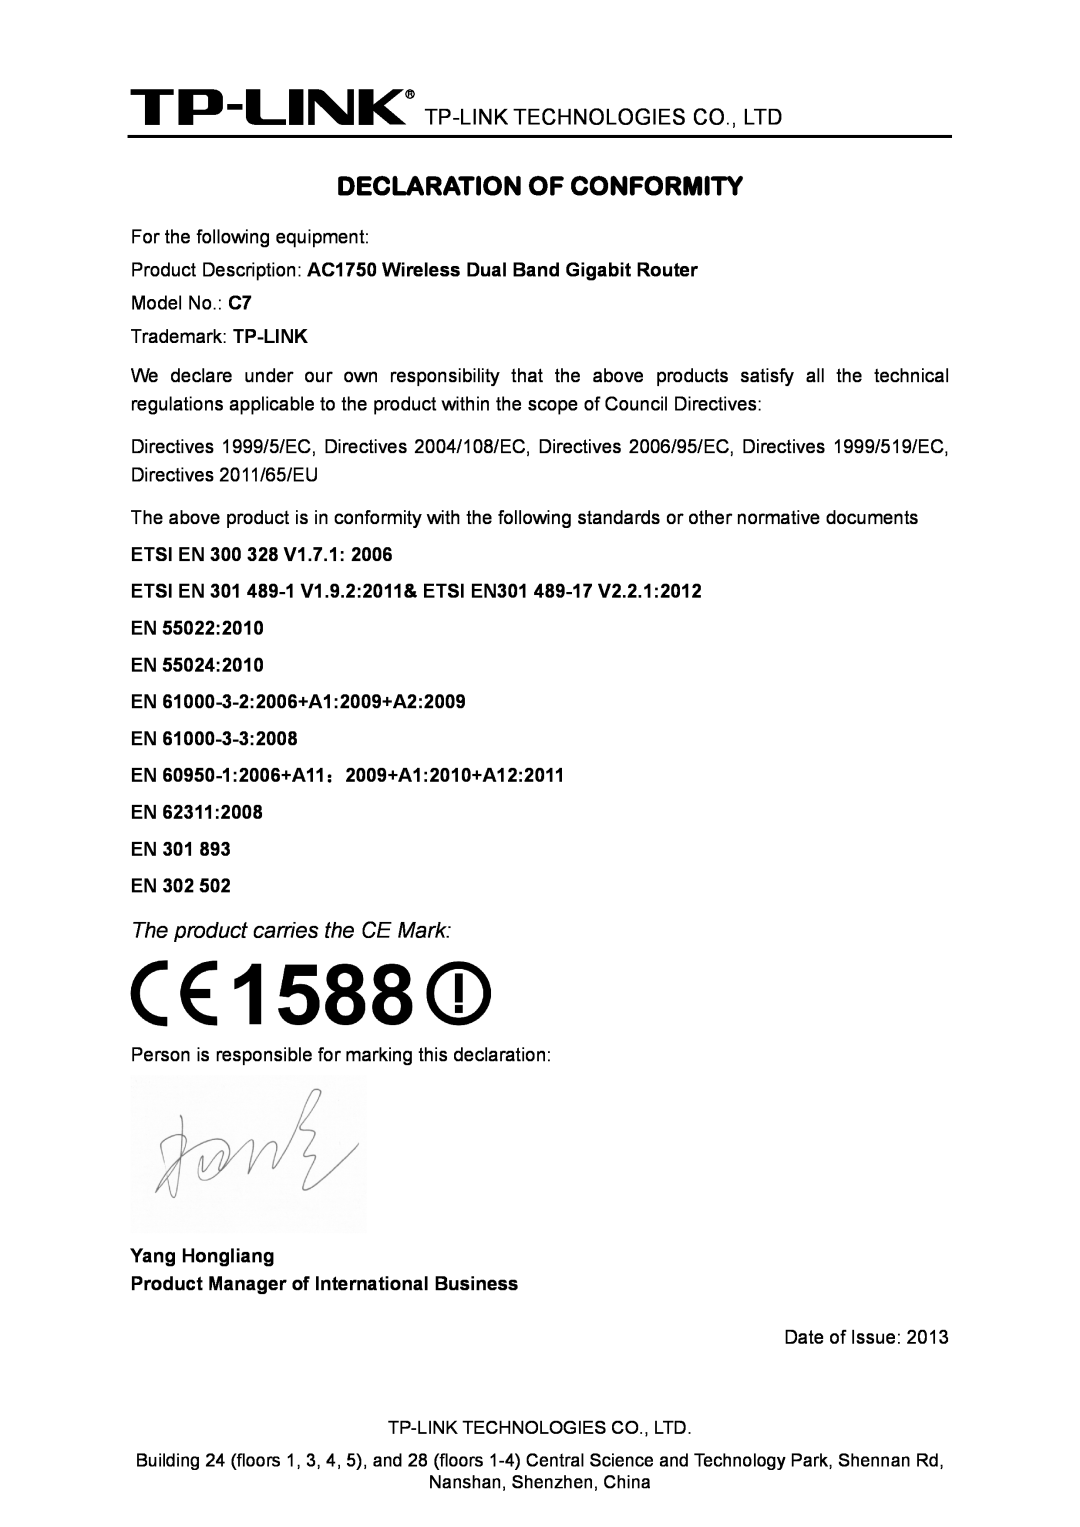 TP-Link Declaration Of Conformity, Product Description AC1750 Wireless Dual Band Gigabit Router, ETSI EN 300 328 V1.7.1 